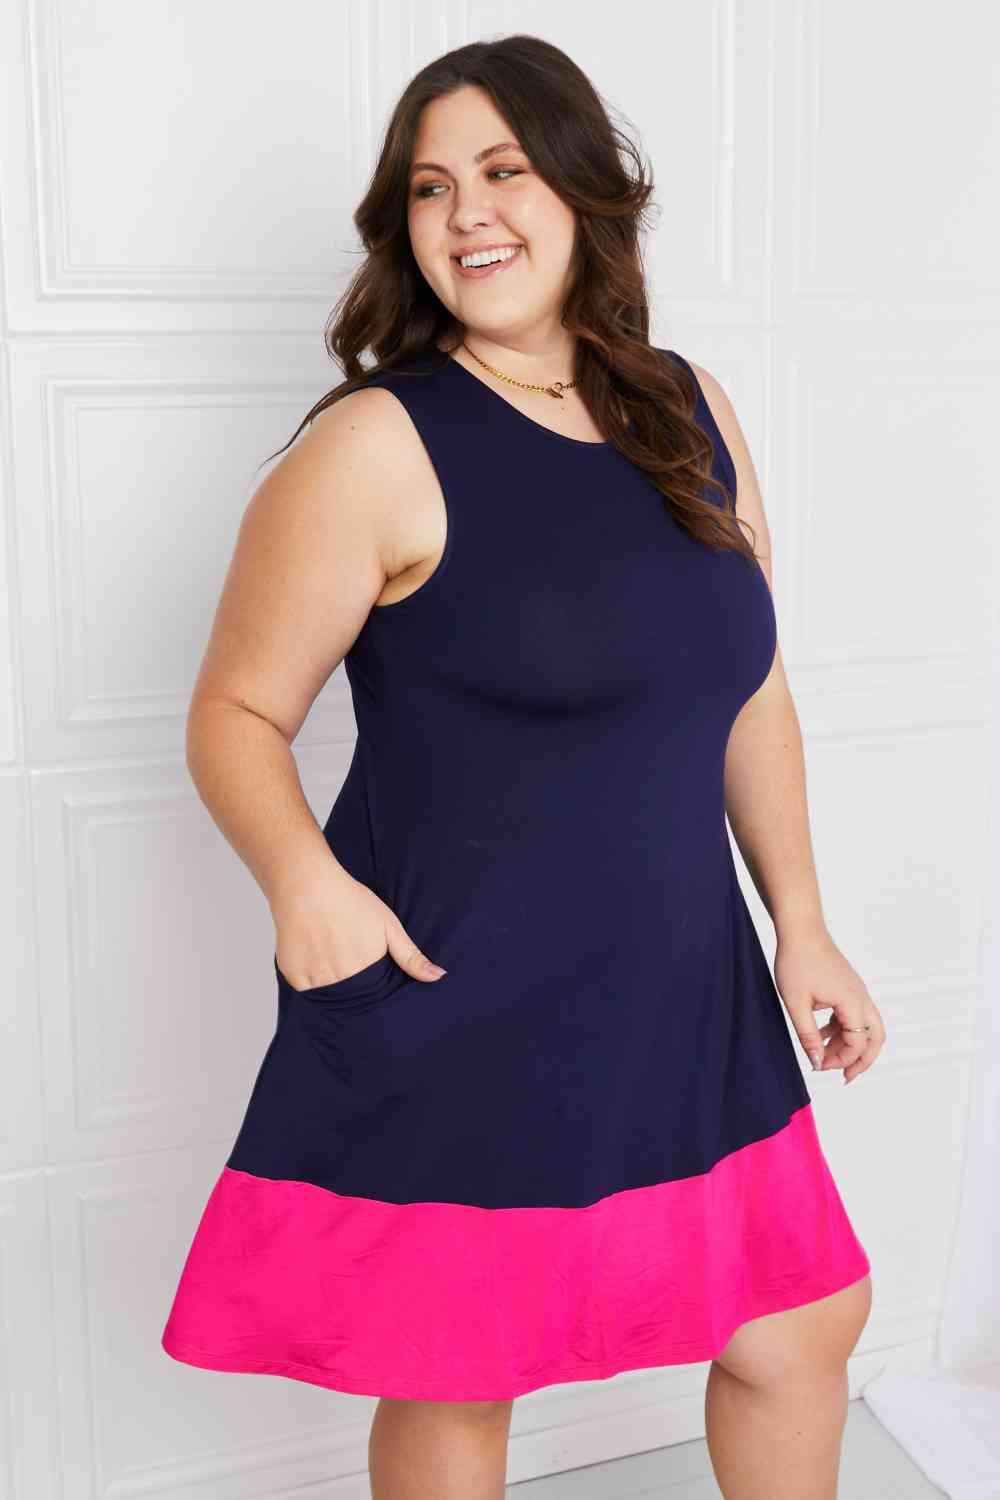 Yelete Full Size Two-Tone Sleeveless Mini Dress with Pockets - AMIClubwear